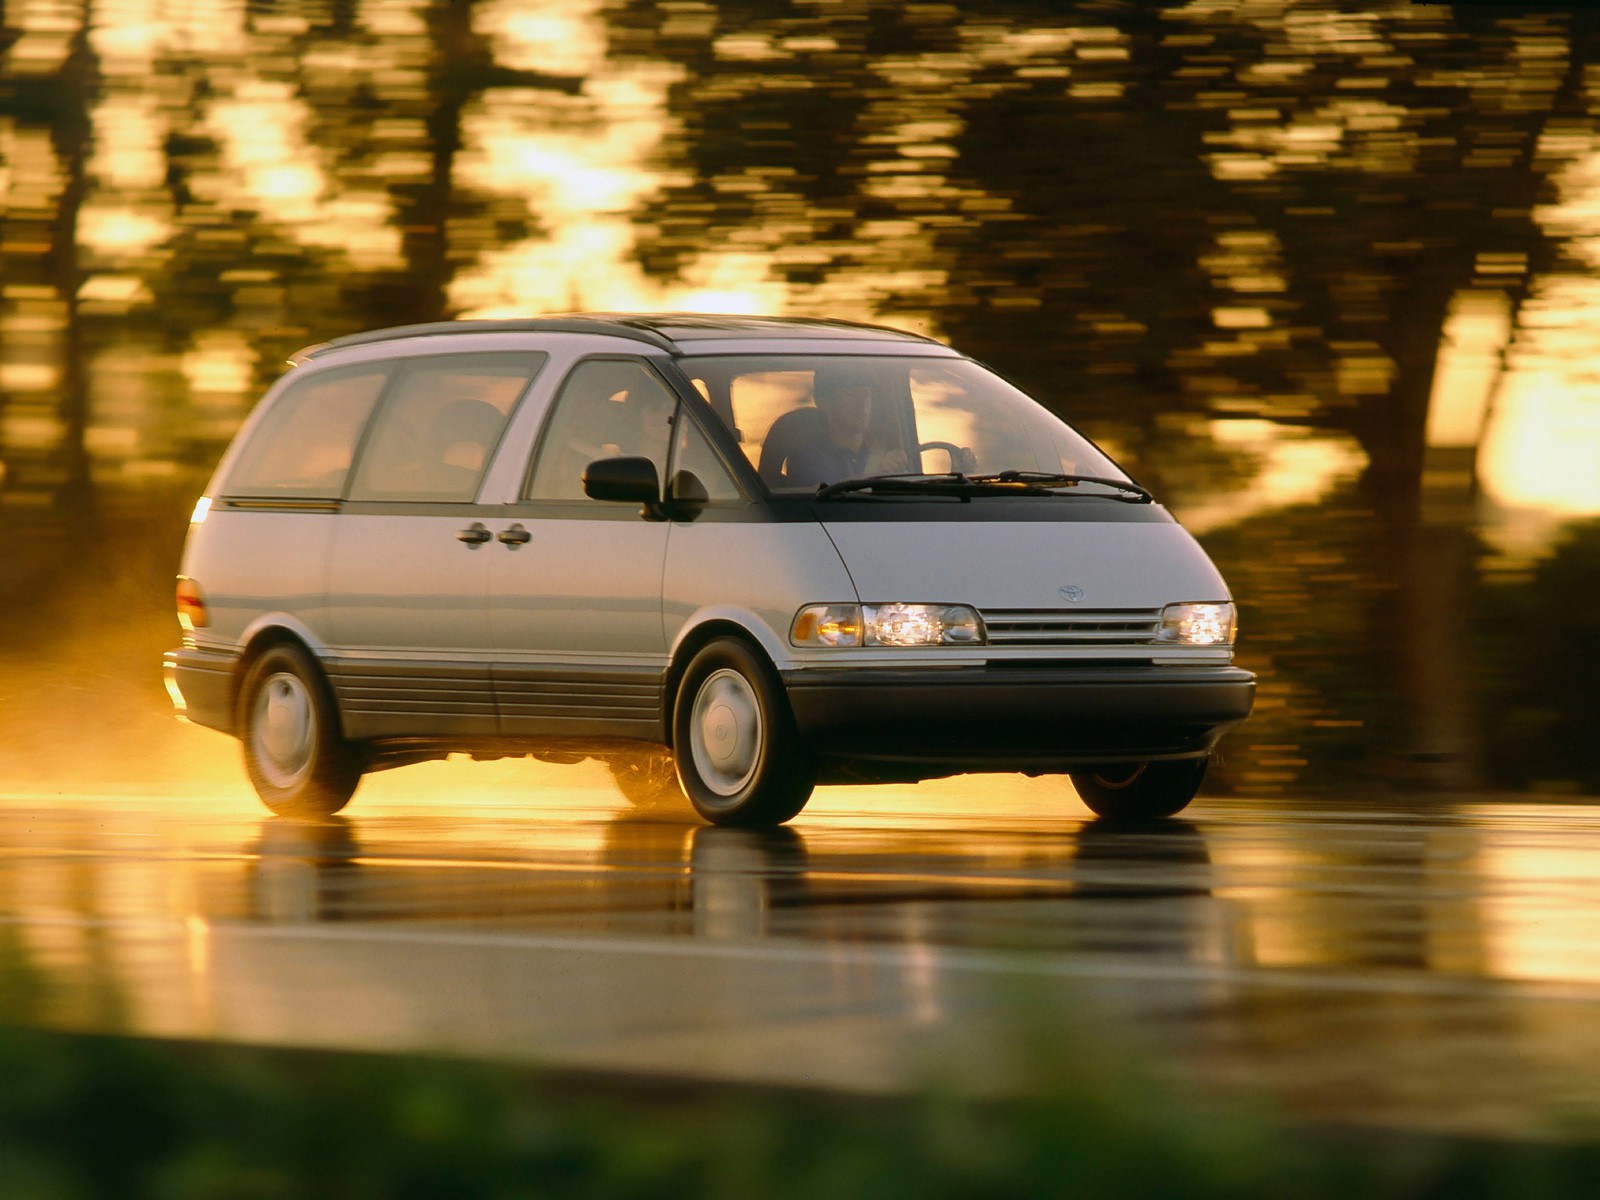 Rare Rides: A Supercharged 1995 Toyota Previa, Mystical Minivan